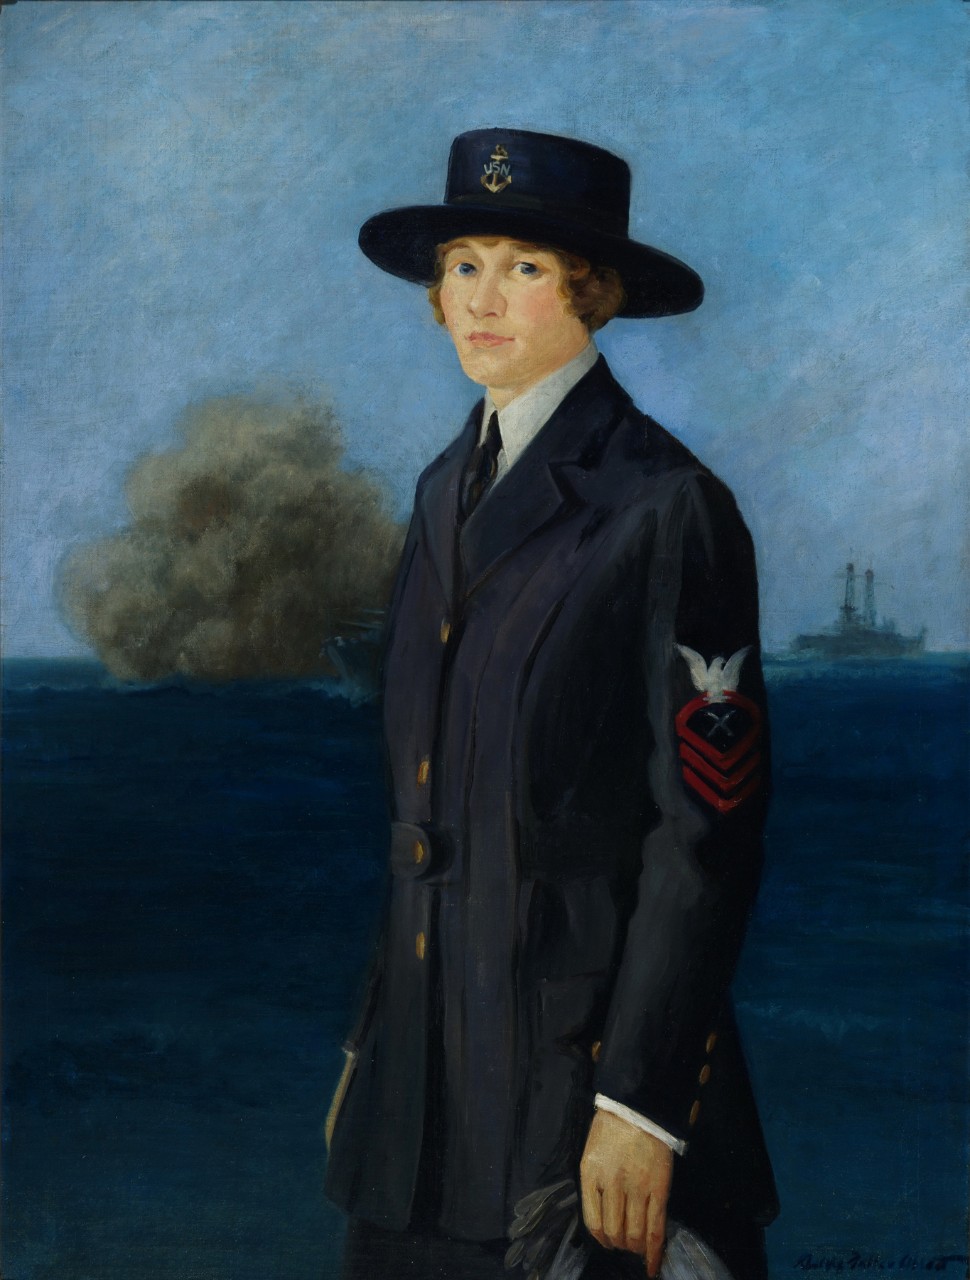 A portrait of a woman wearing a World War I uniform, in the far background is a ship firing its guns